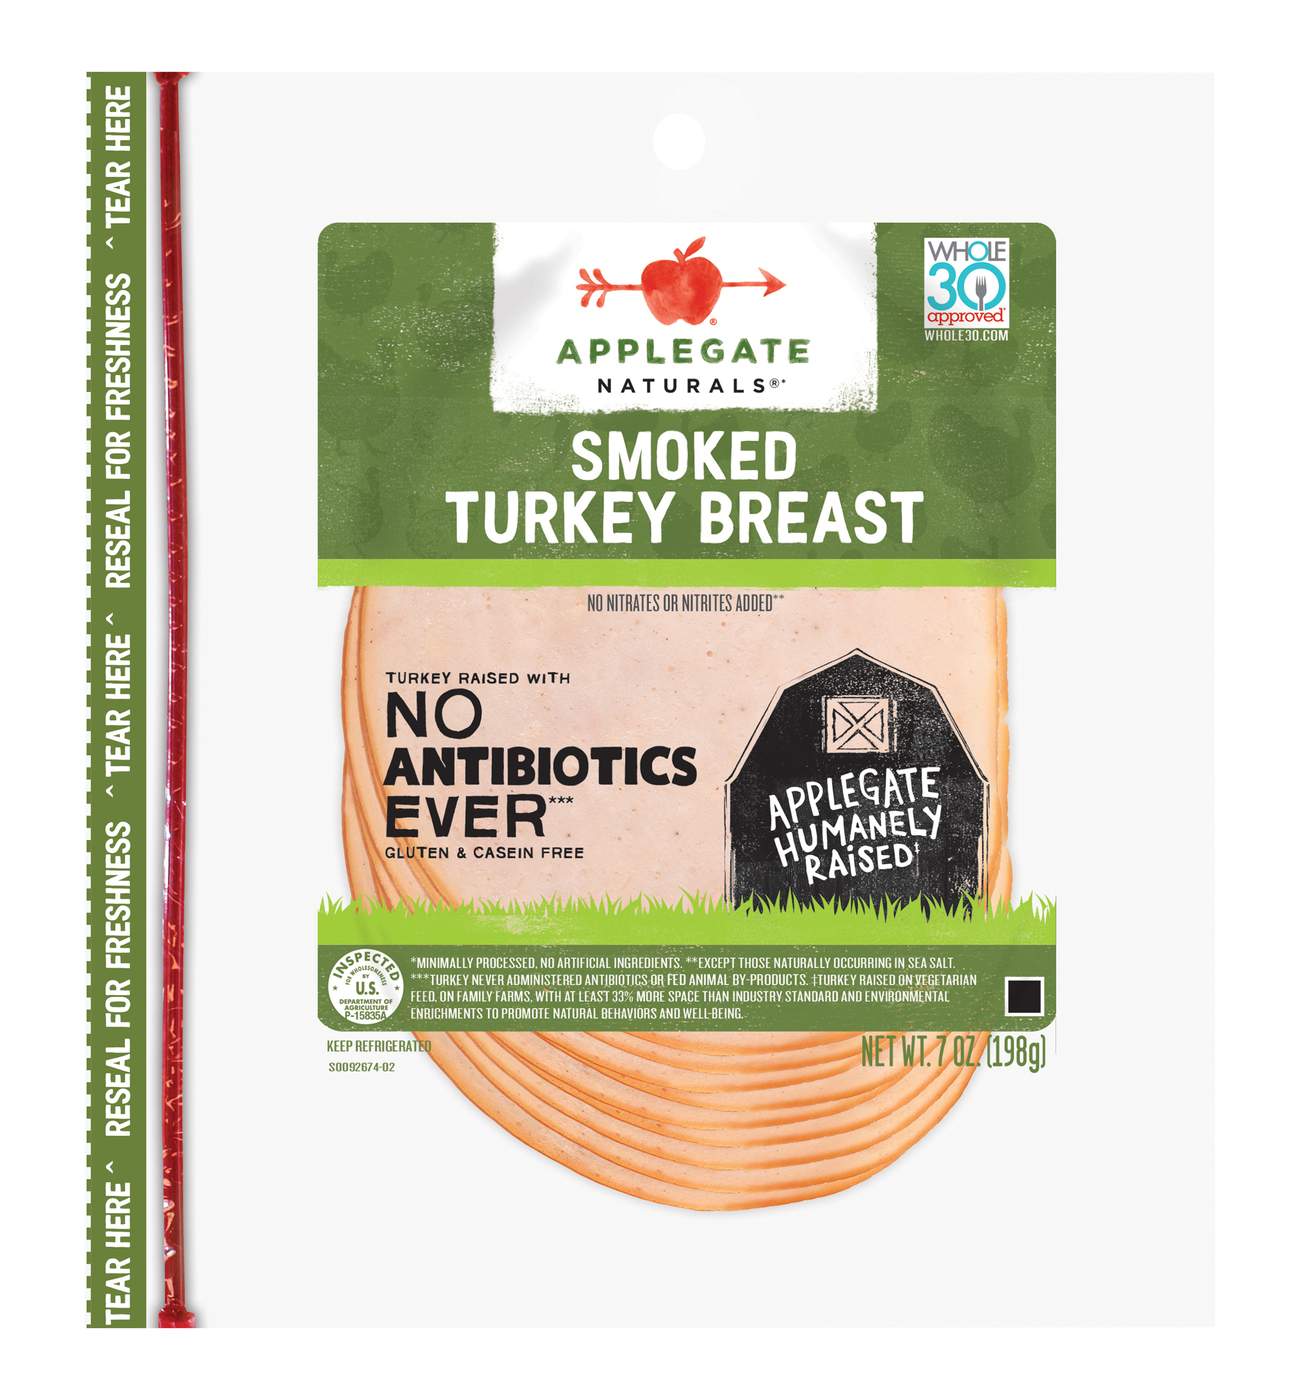 Applegate Naturals Smoked Turkey Breast; image 1 of 2